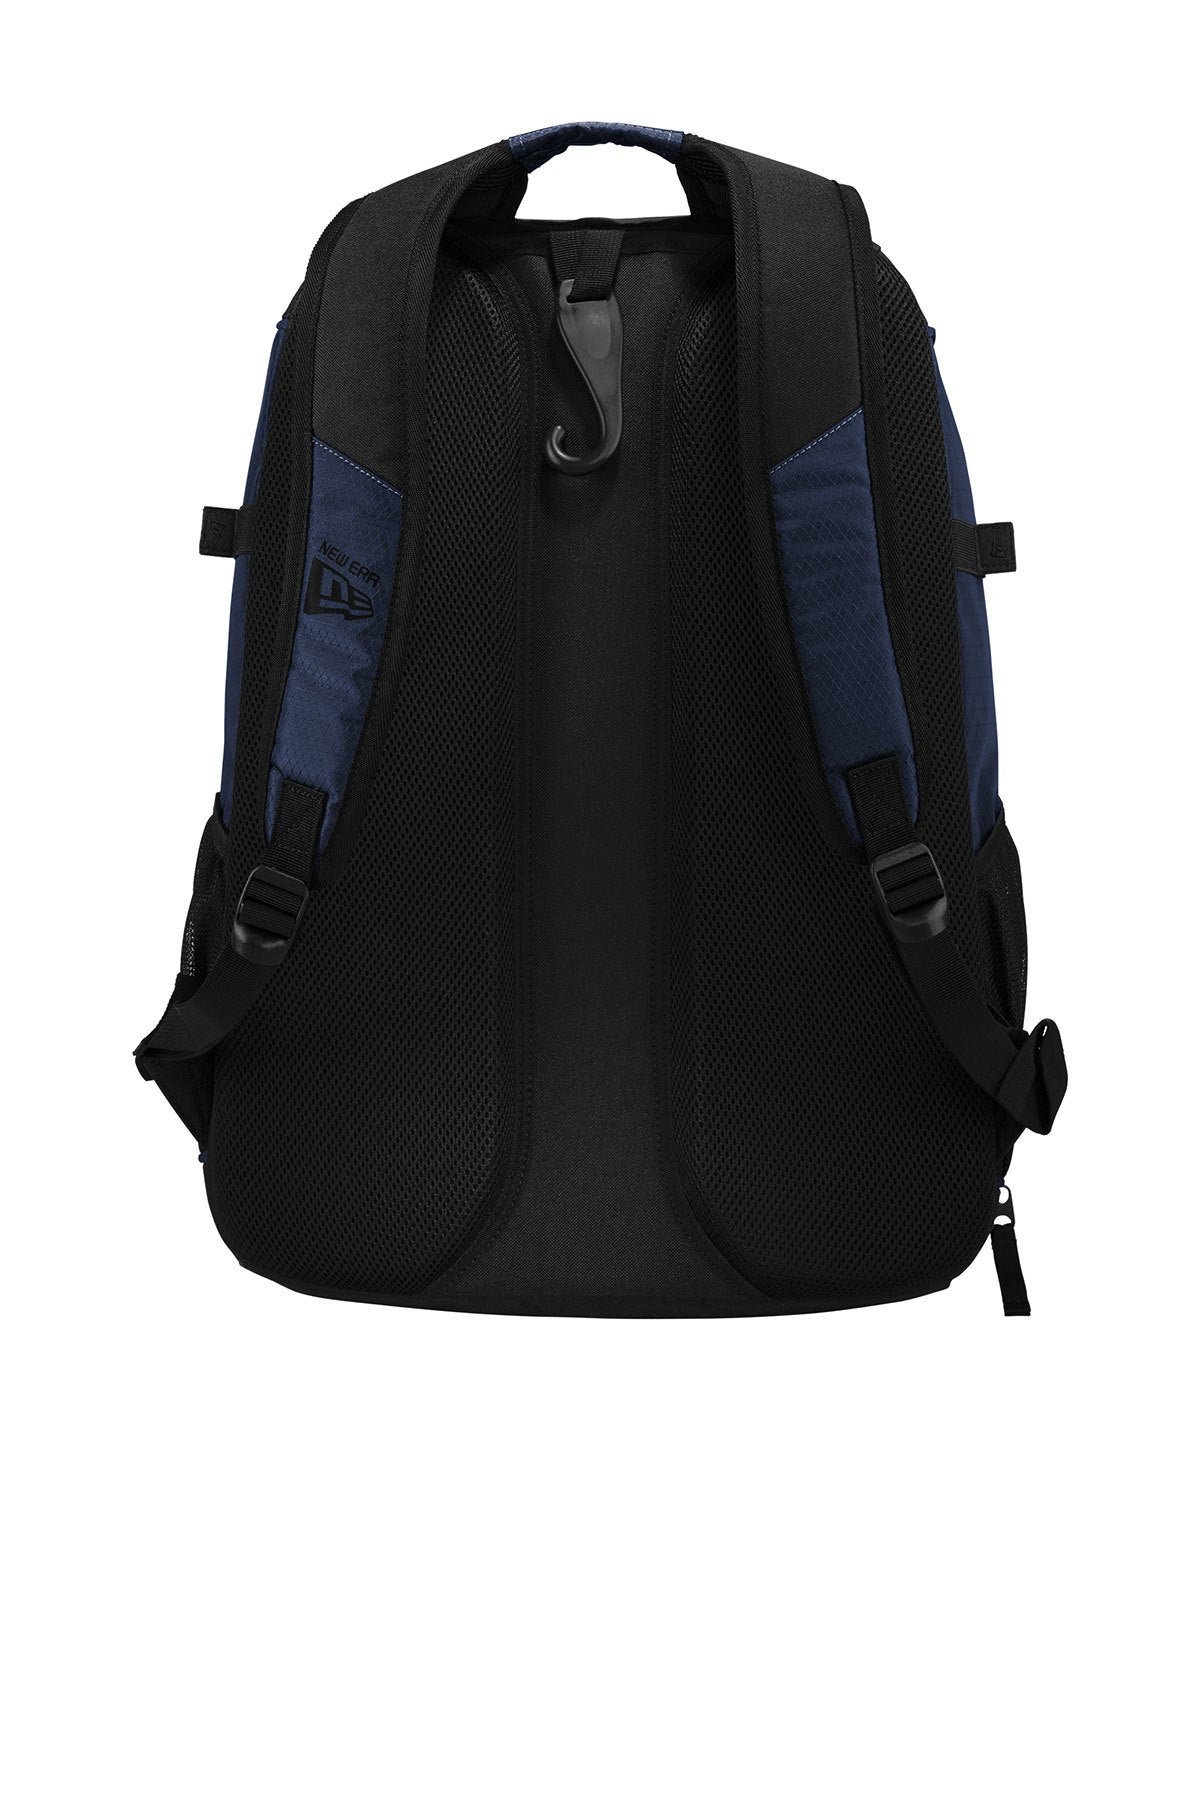 New Era Shutout Custom Backpacks, True Navy Black